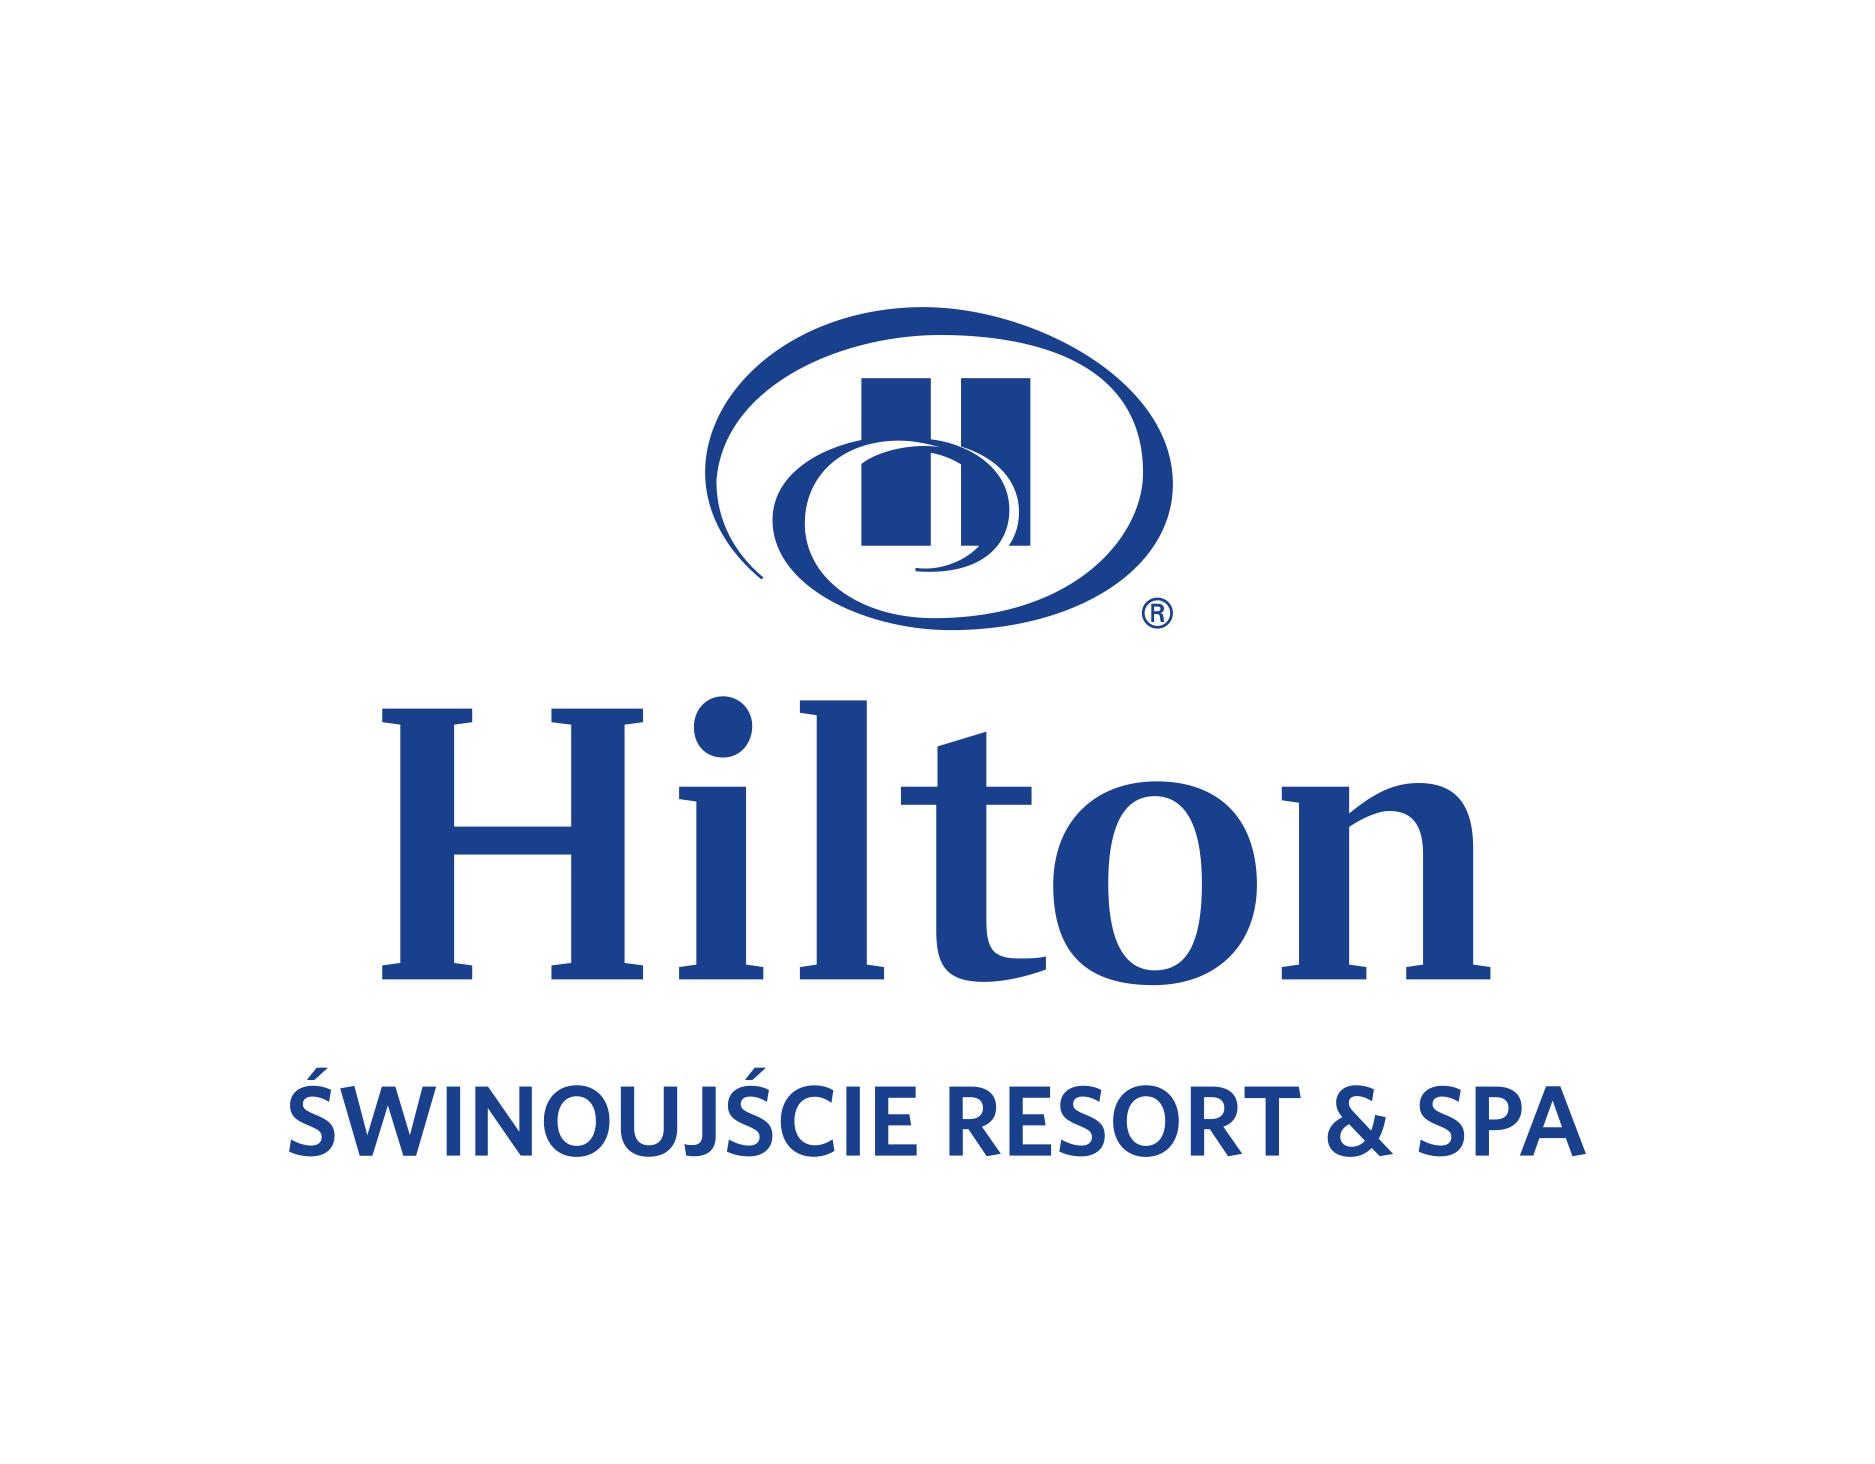 Zdrojowa Hotels-Hilton logo.jpg